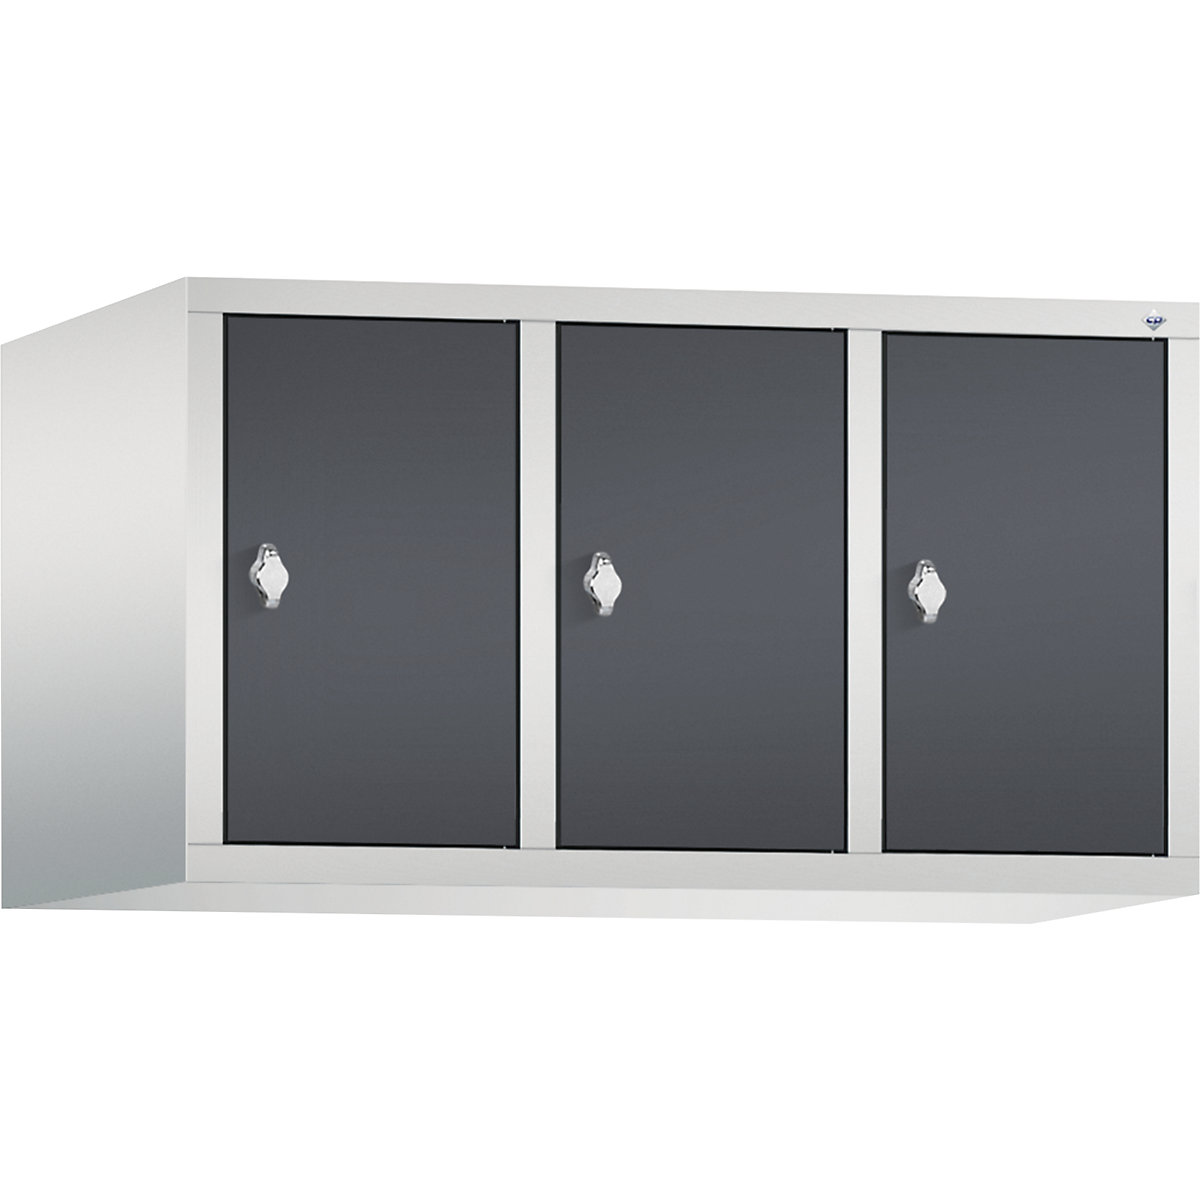 C+P – Altillo CLASSIC, 3 compartimentos, anchura de compartimento 300 mm, gris luminoso / gris negruzco